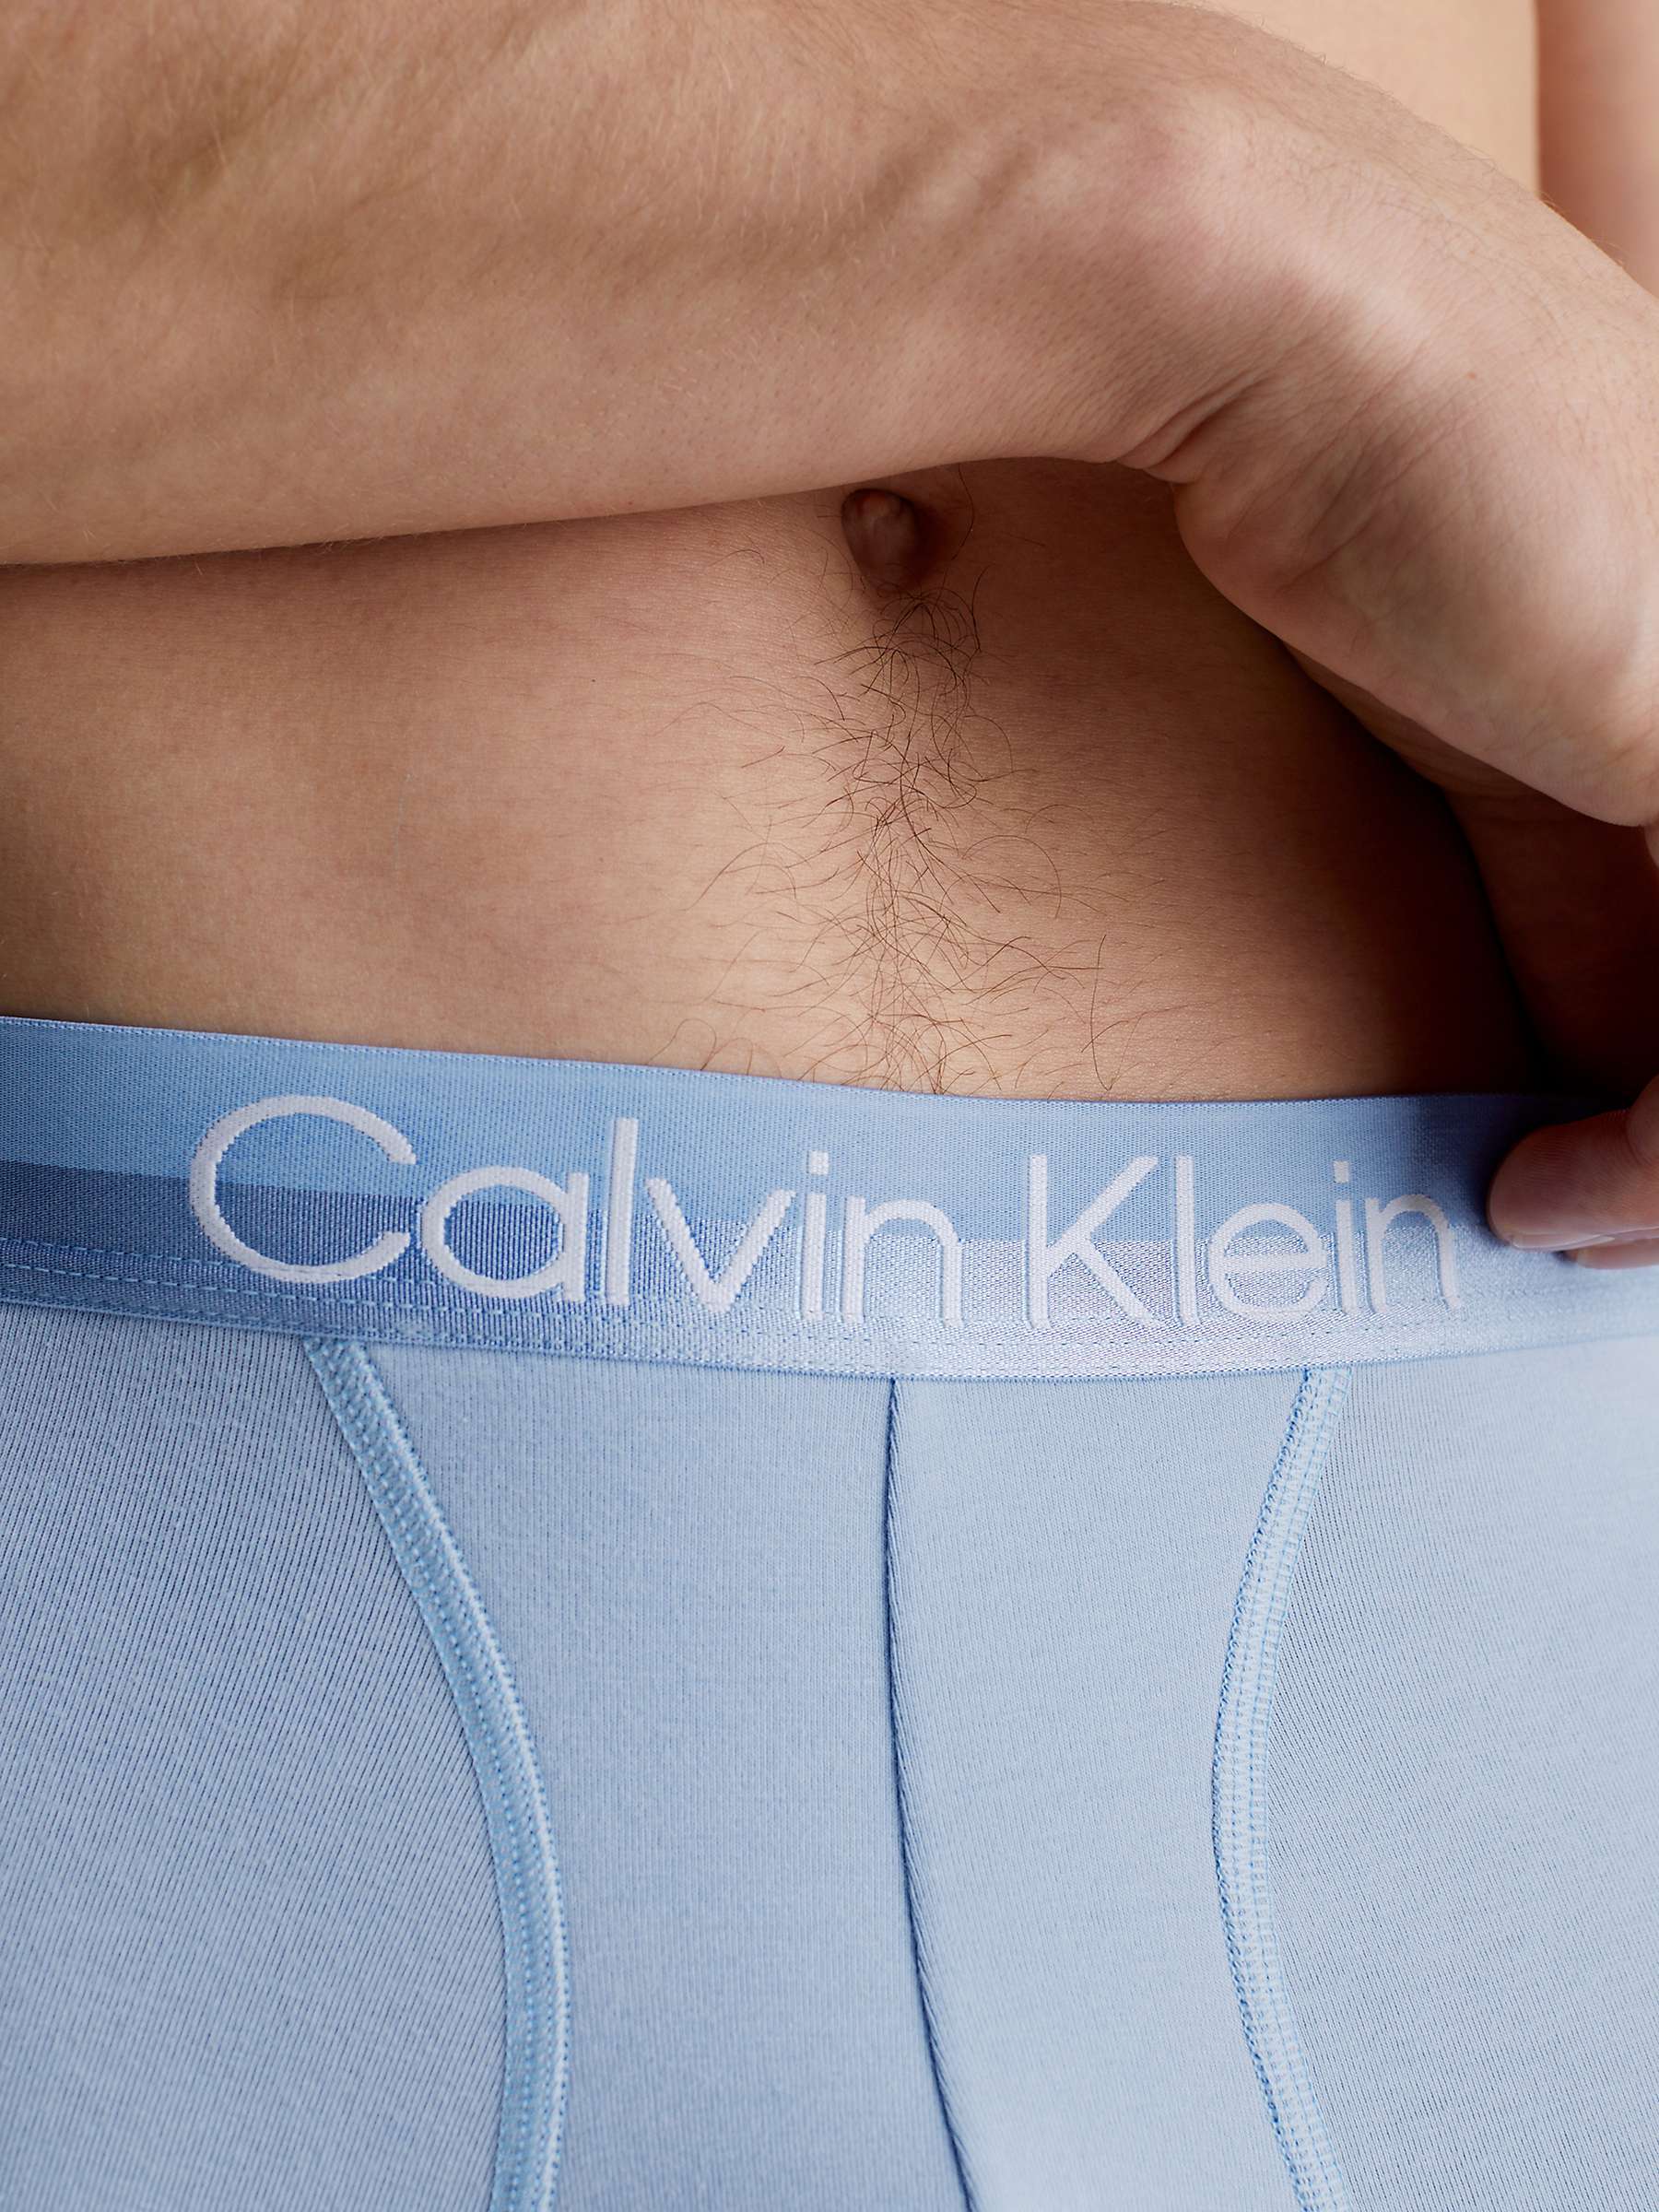 Buy Calvin Klein Cotton Stretch Trunks, Pack of 3, Griffin Grey/Blue/Black Online at johnlewis.com